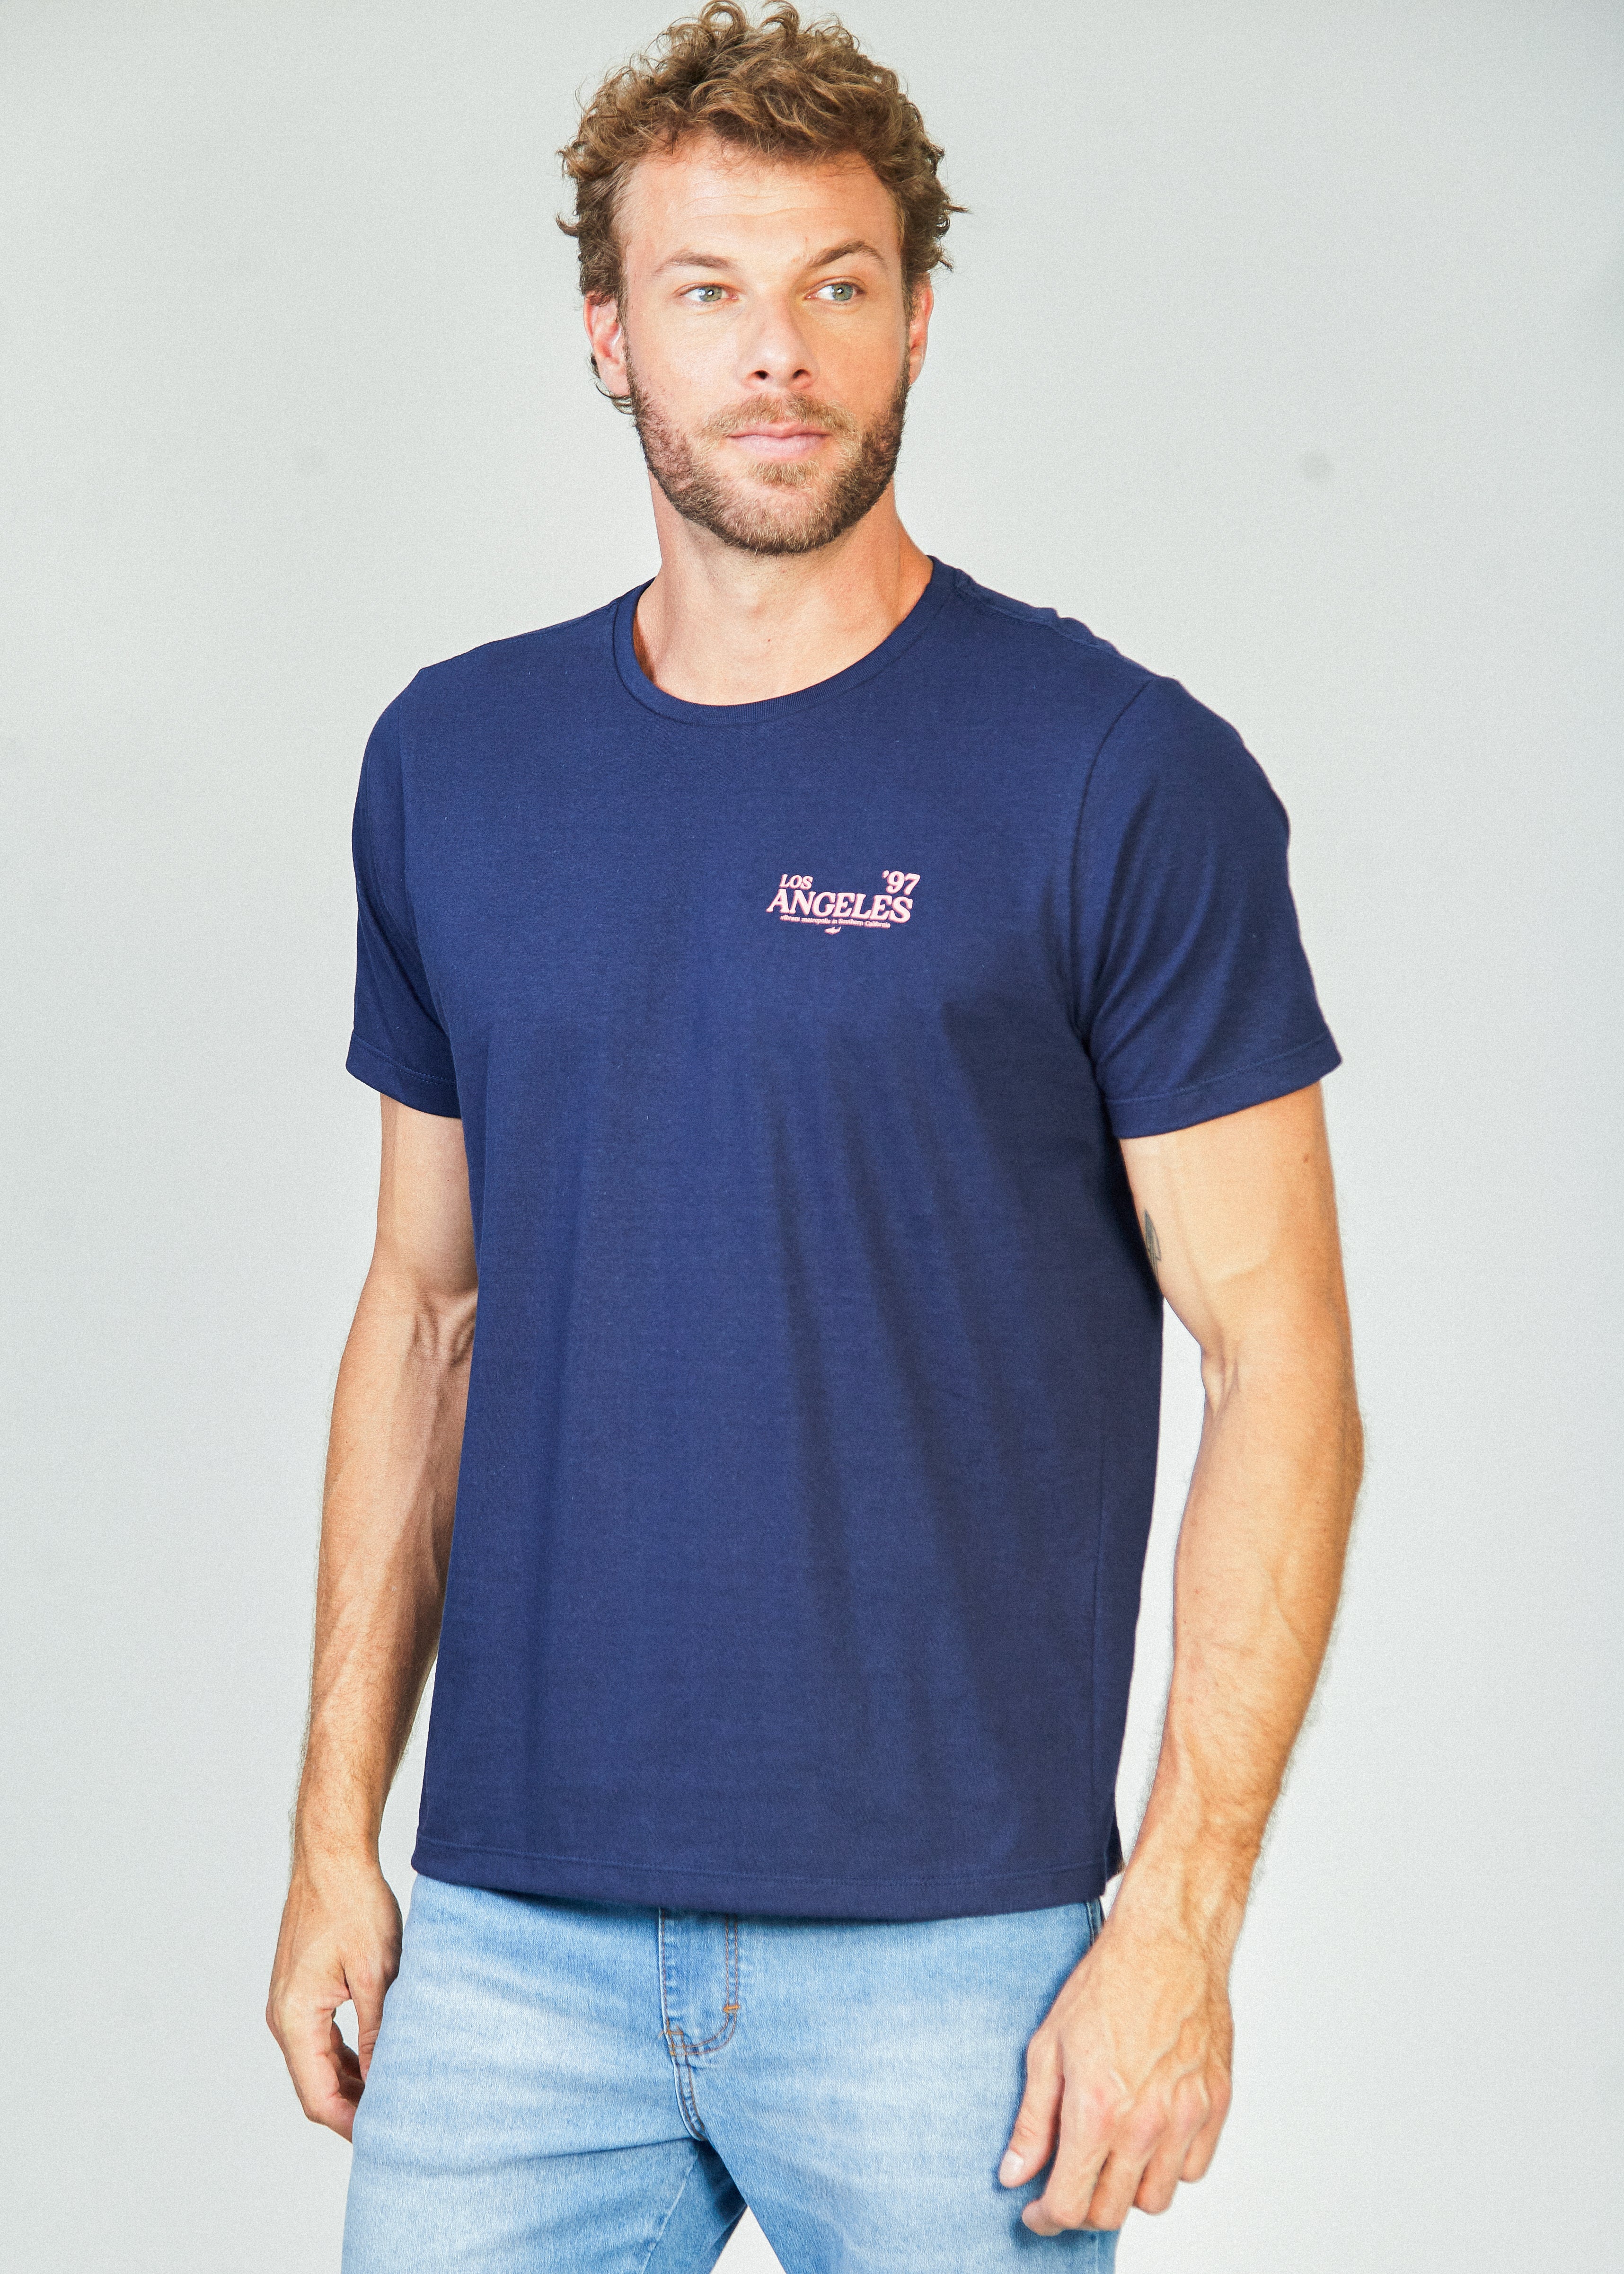 Camiseta Estampada Los Angeles - Azul Marinho